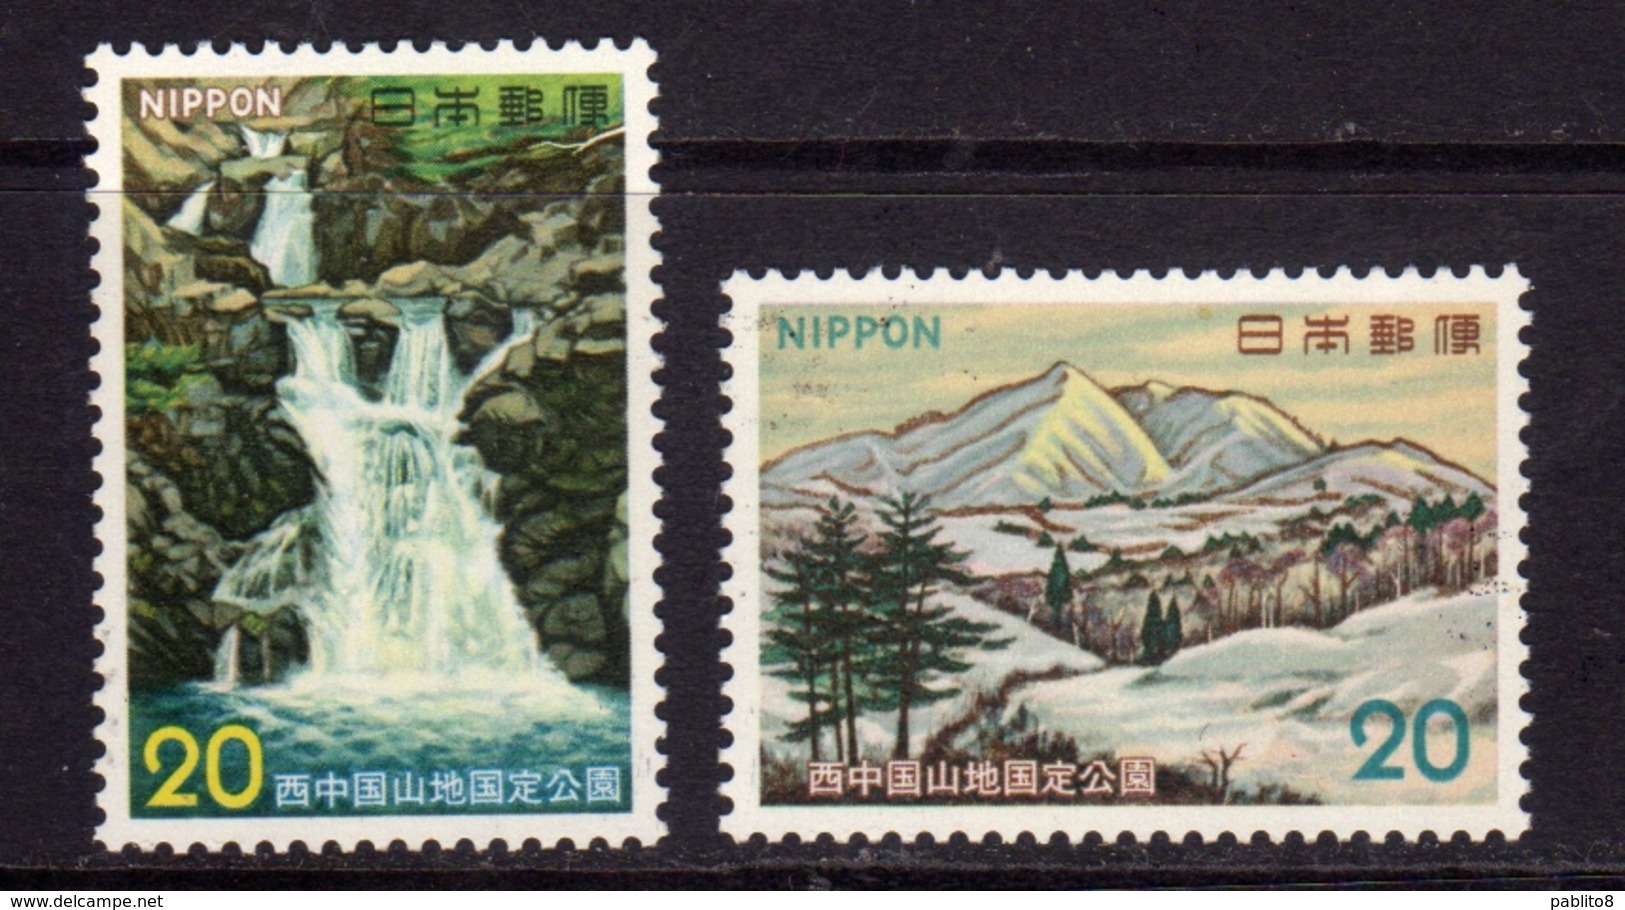 JAPAN NIPPON GIAPPONE JAPON 1973 NISHI-CHUGOKU-SANCHI QUASI-NATIONAL PARK COMPLETE SET SERIE COMPLETA  MNH - Nuovi